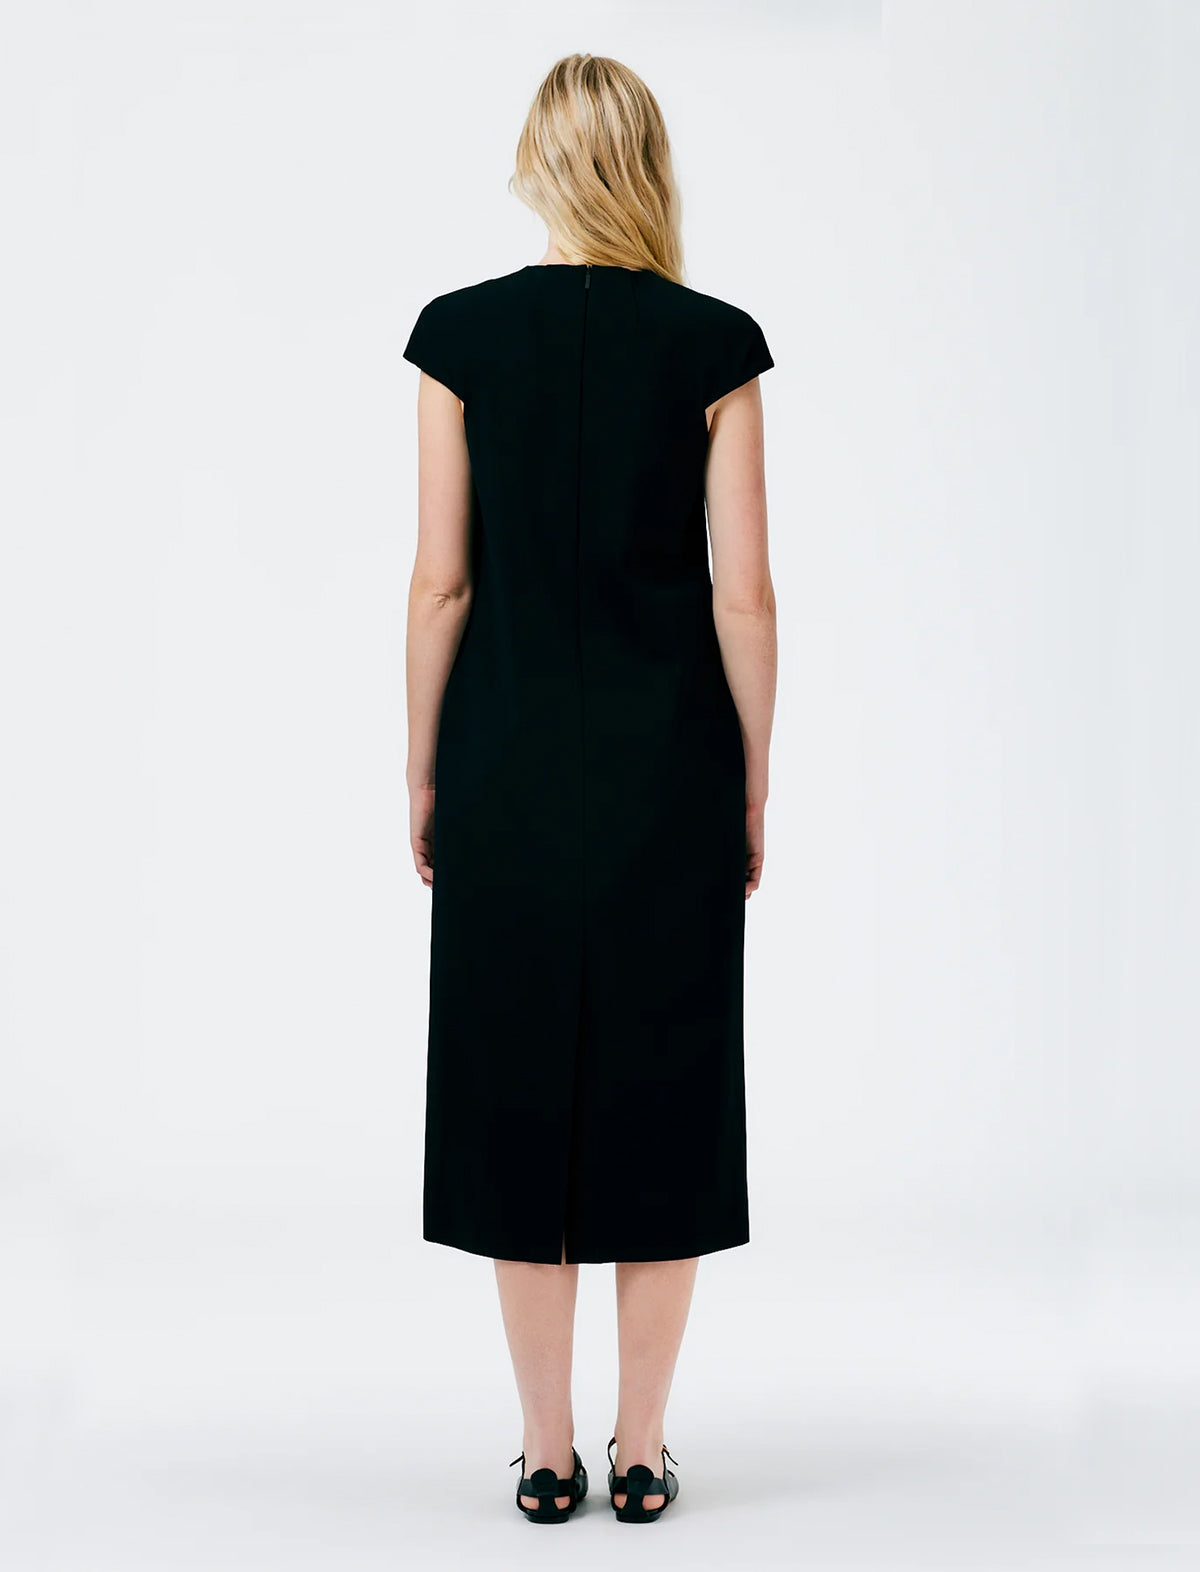 TIBI Compact Ultra Stretch Knit Lean Sleeveless Dress in Black